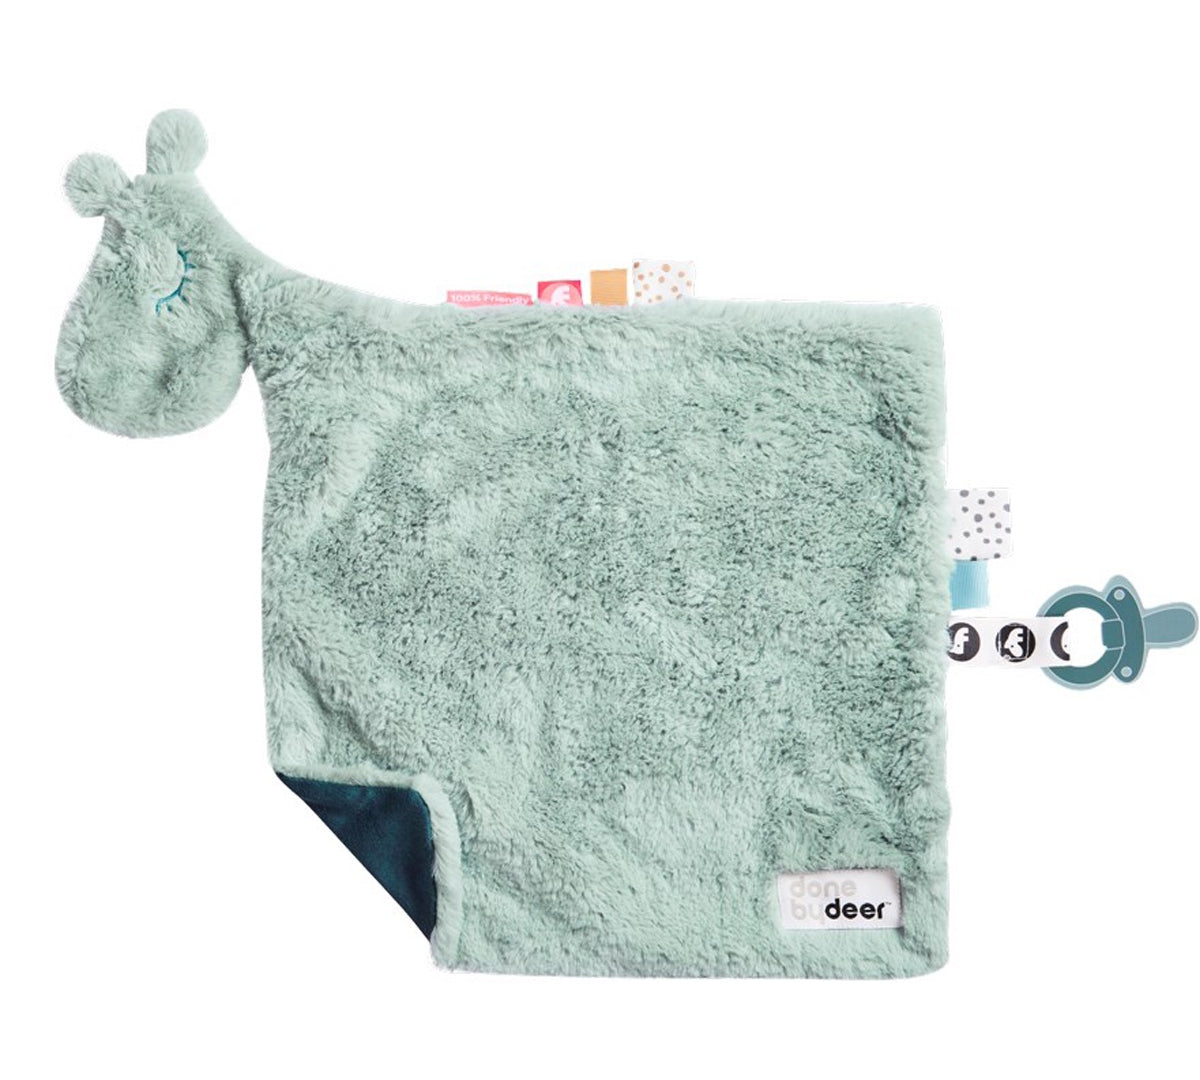 Deer Industries Done by Deer Comfort Blanket Raffi Blue. Baby soother plush giraffe, best gift for baby boy or girl. 